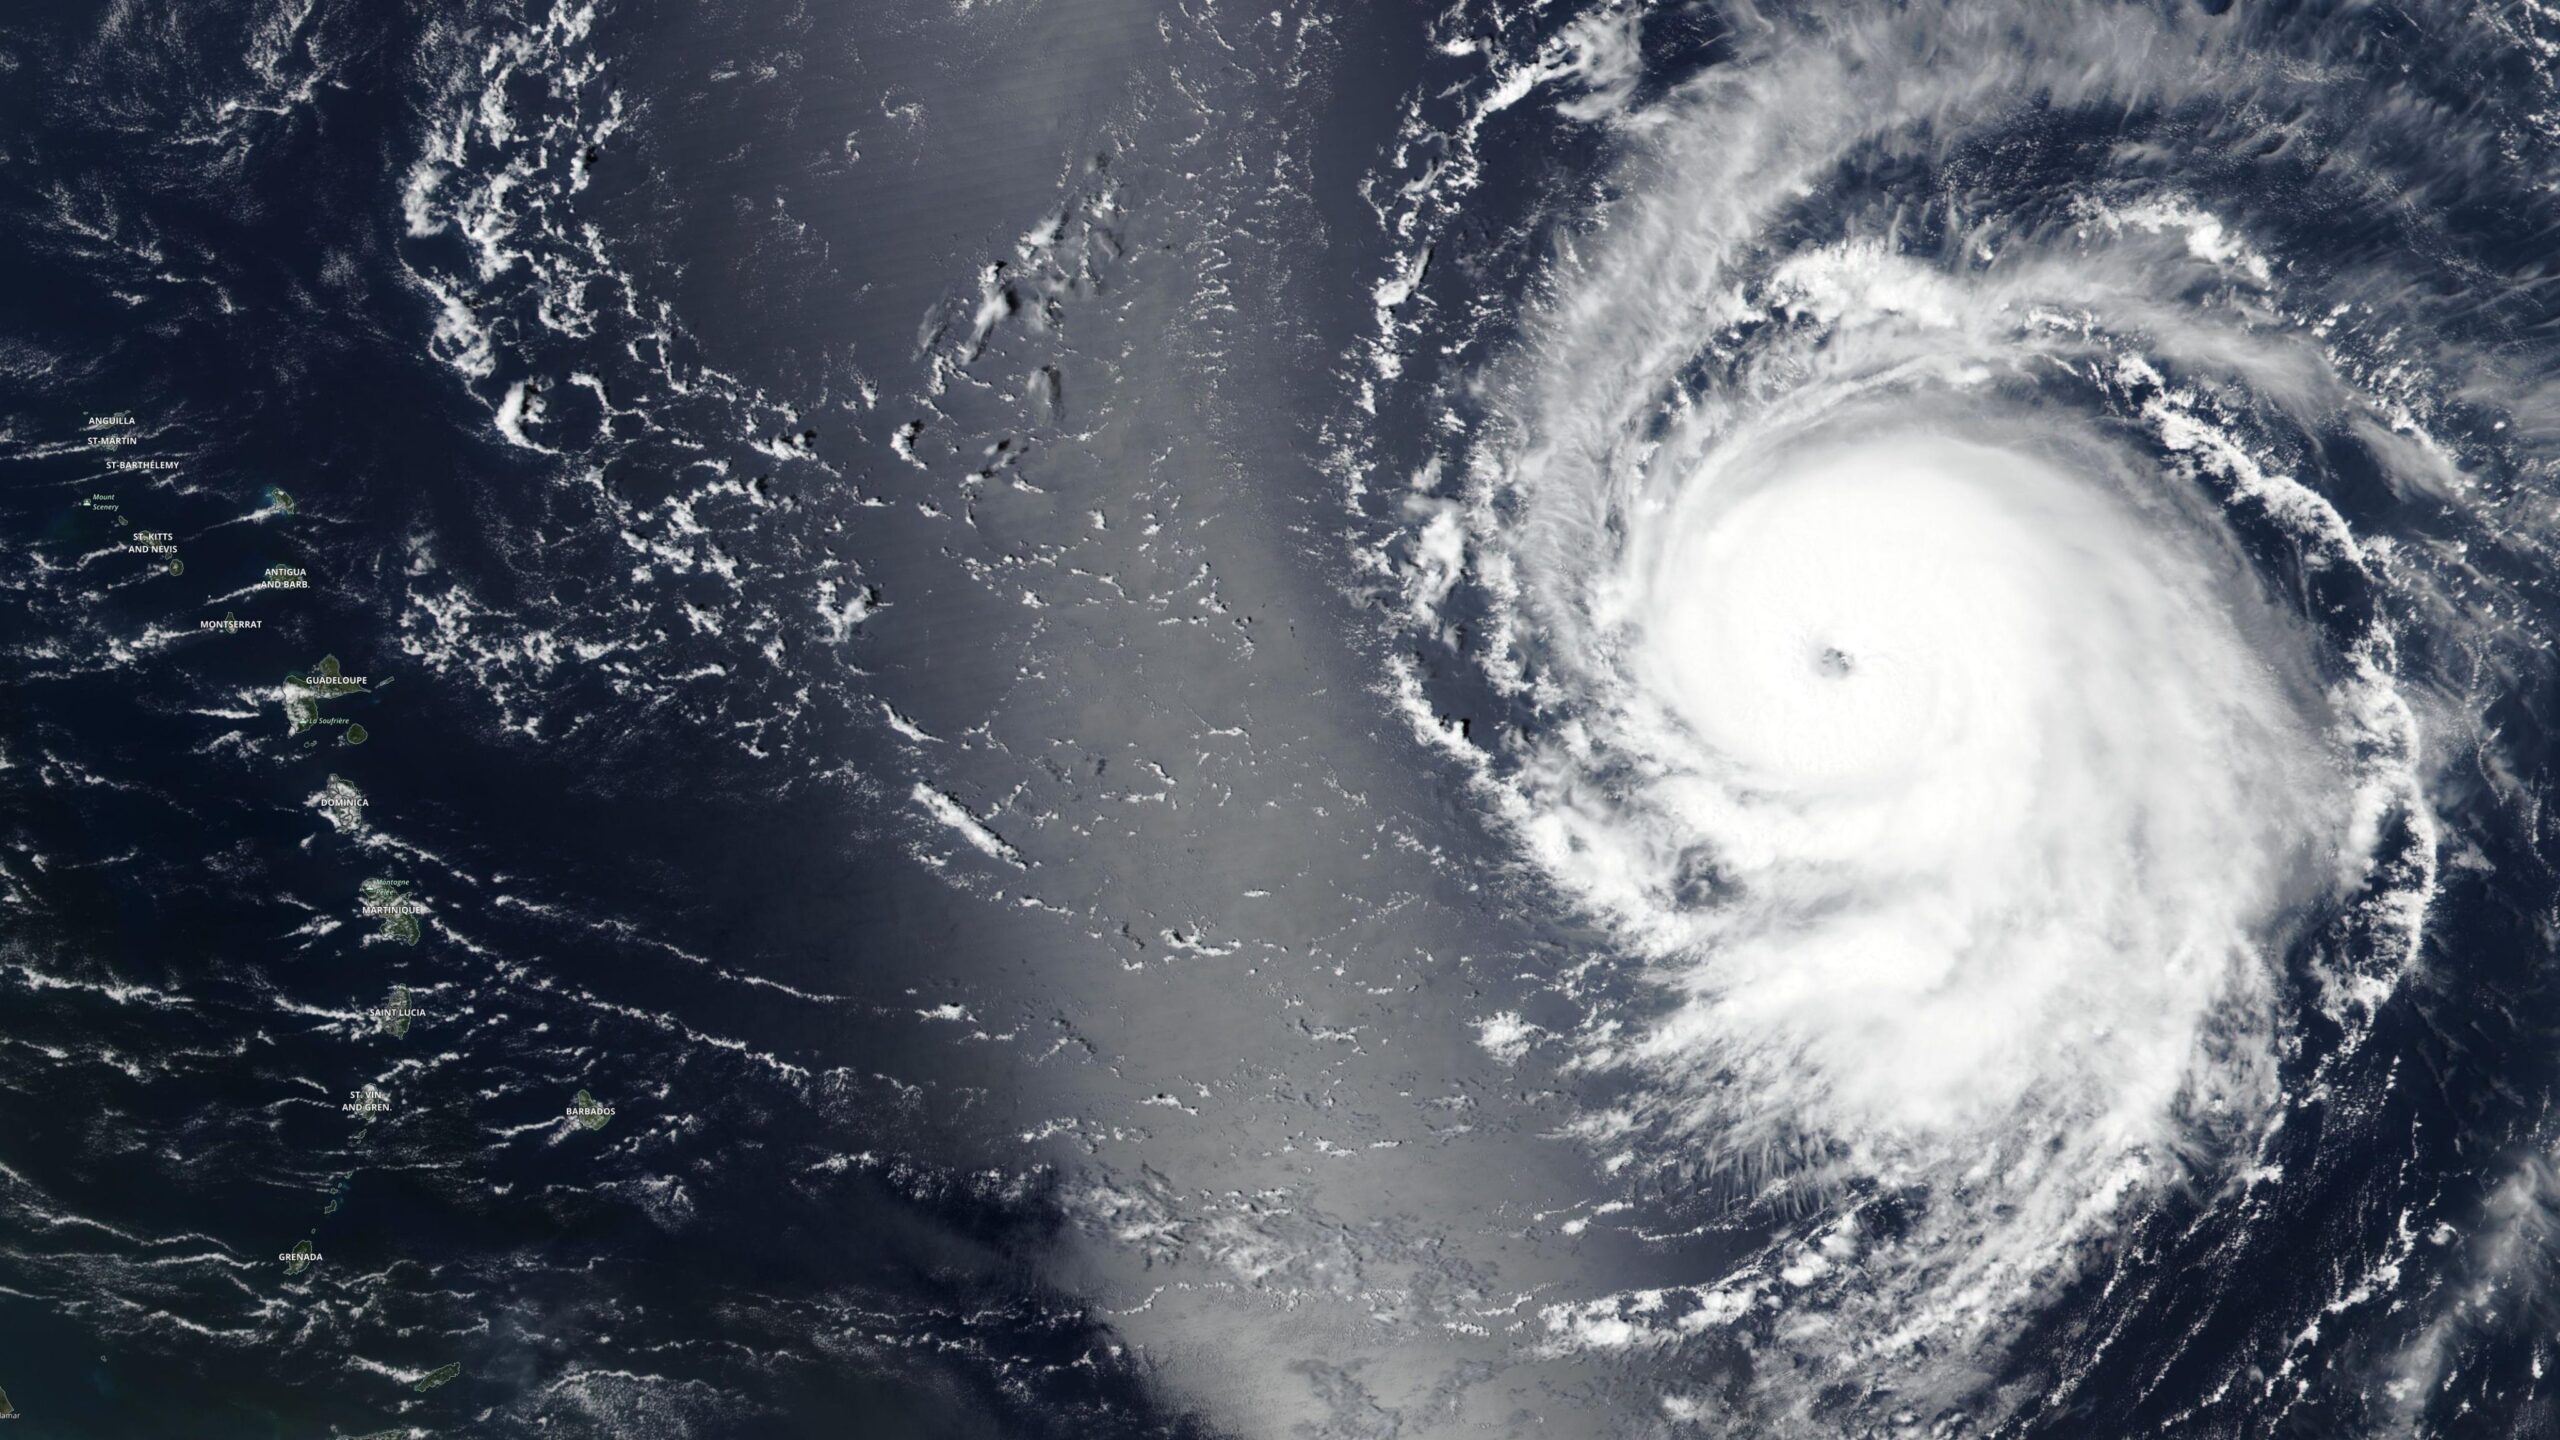 Image of Hurricane Lee courtesy Suomi NPP satellite